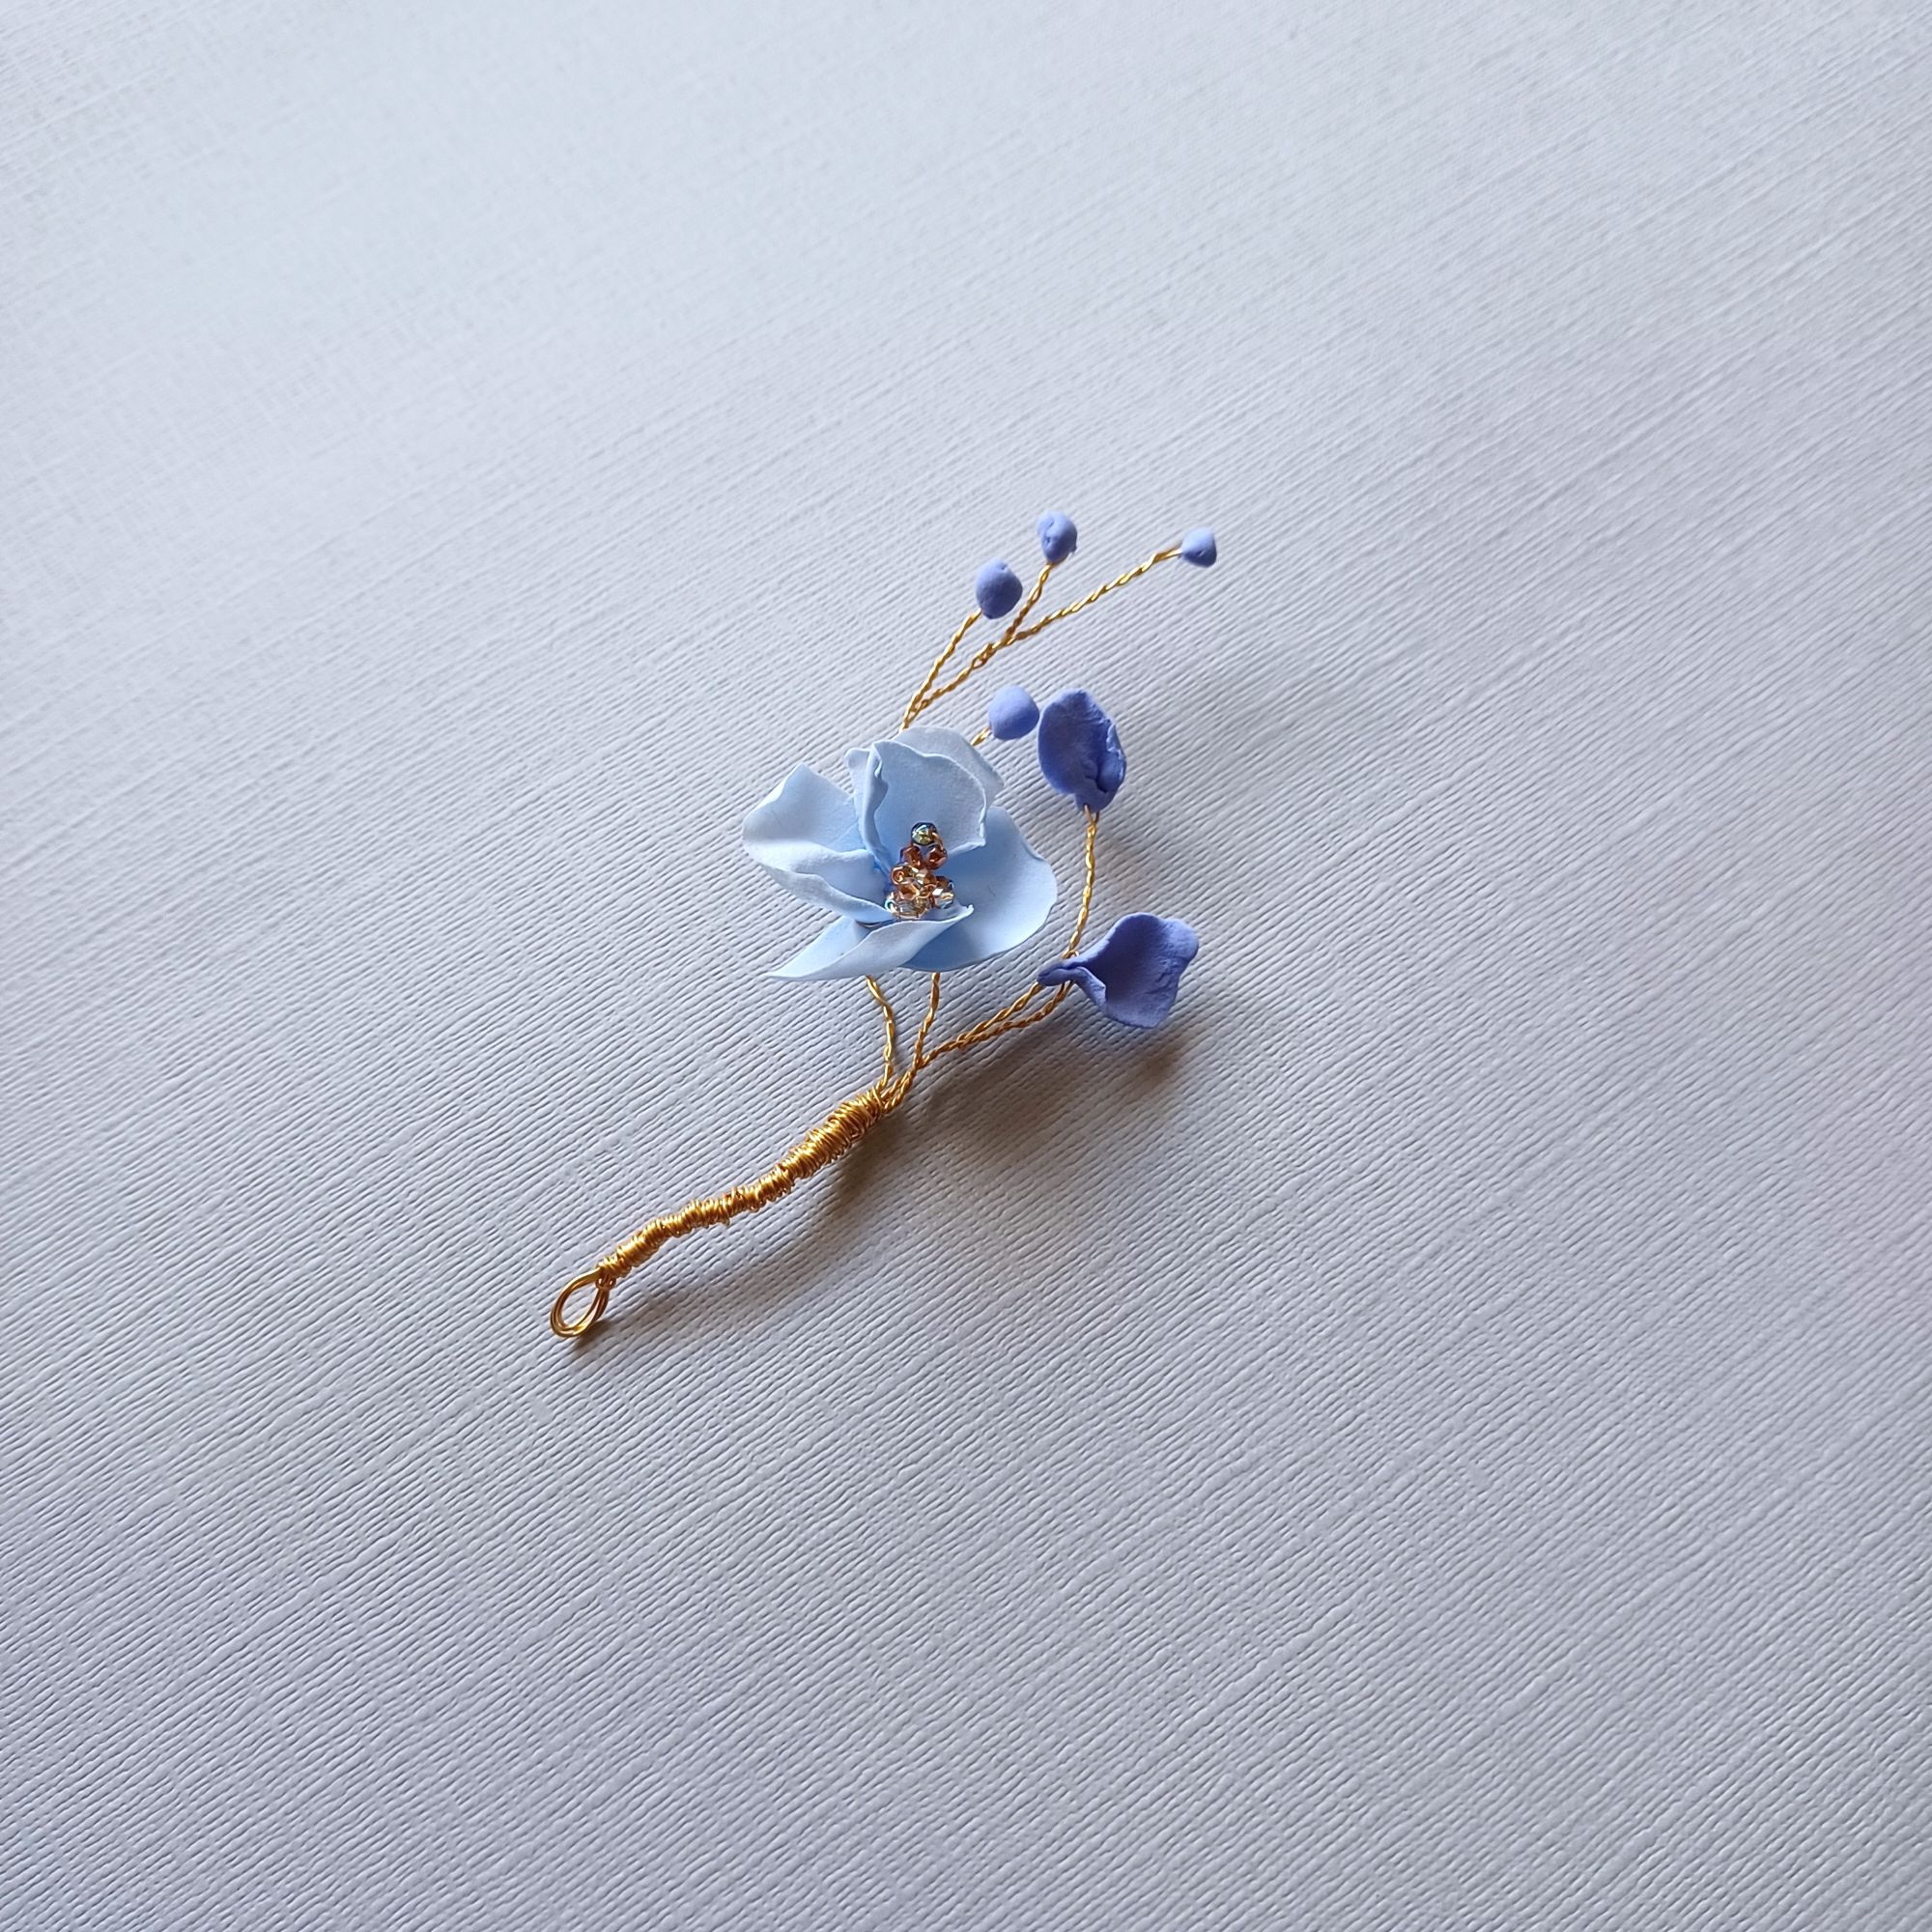 Handmade blue flower bridal-wedding hair pin-accessory by Beady Bride-UK-El